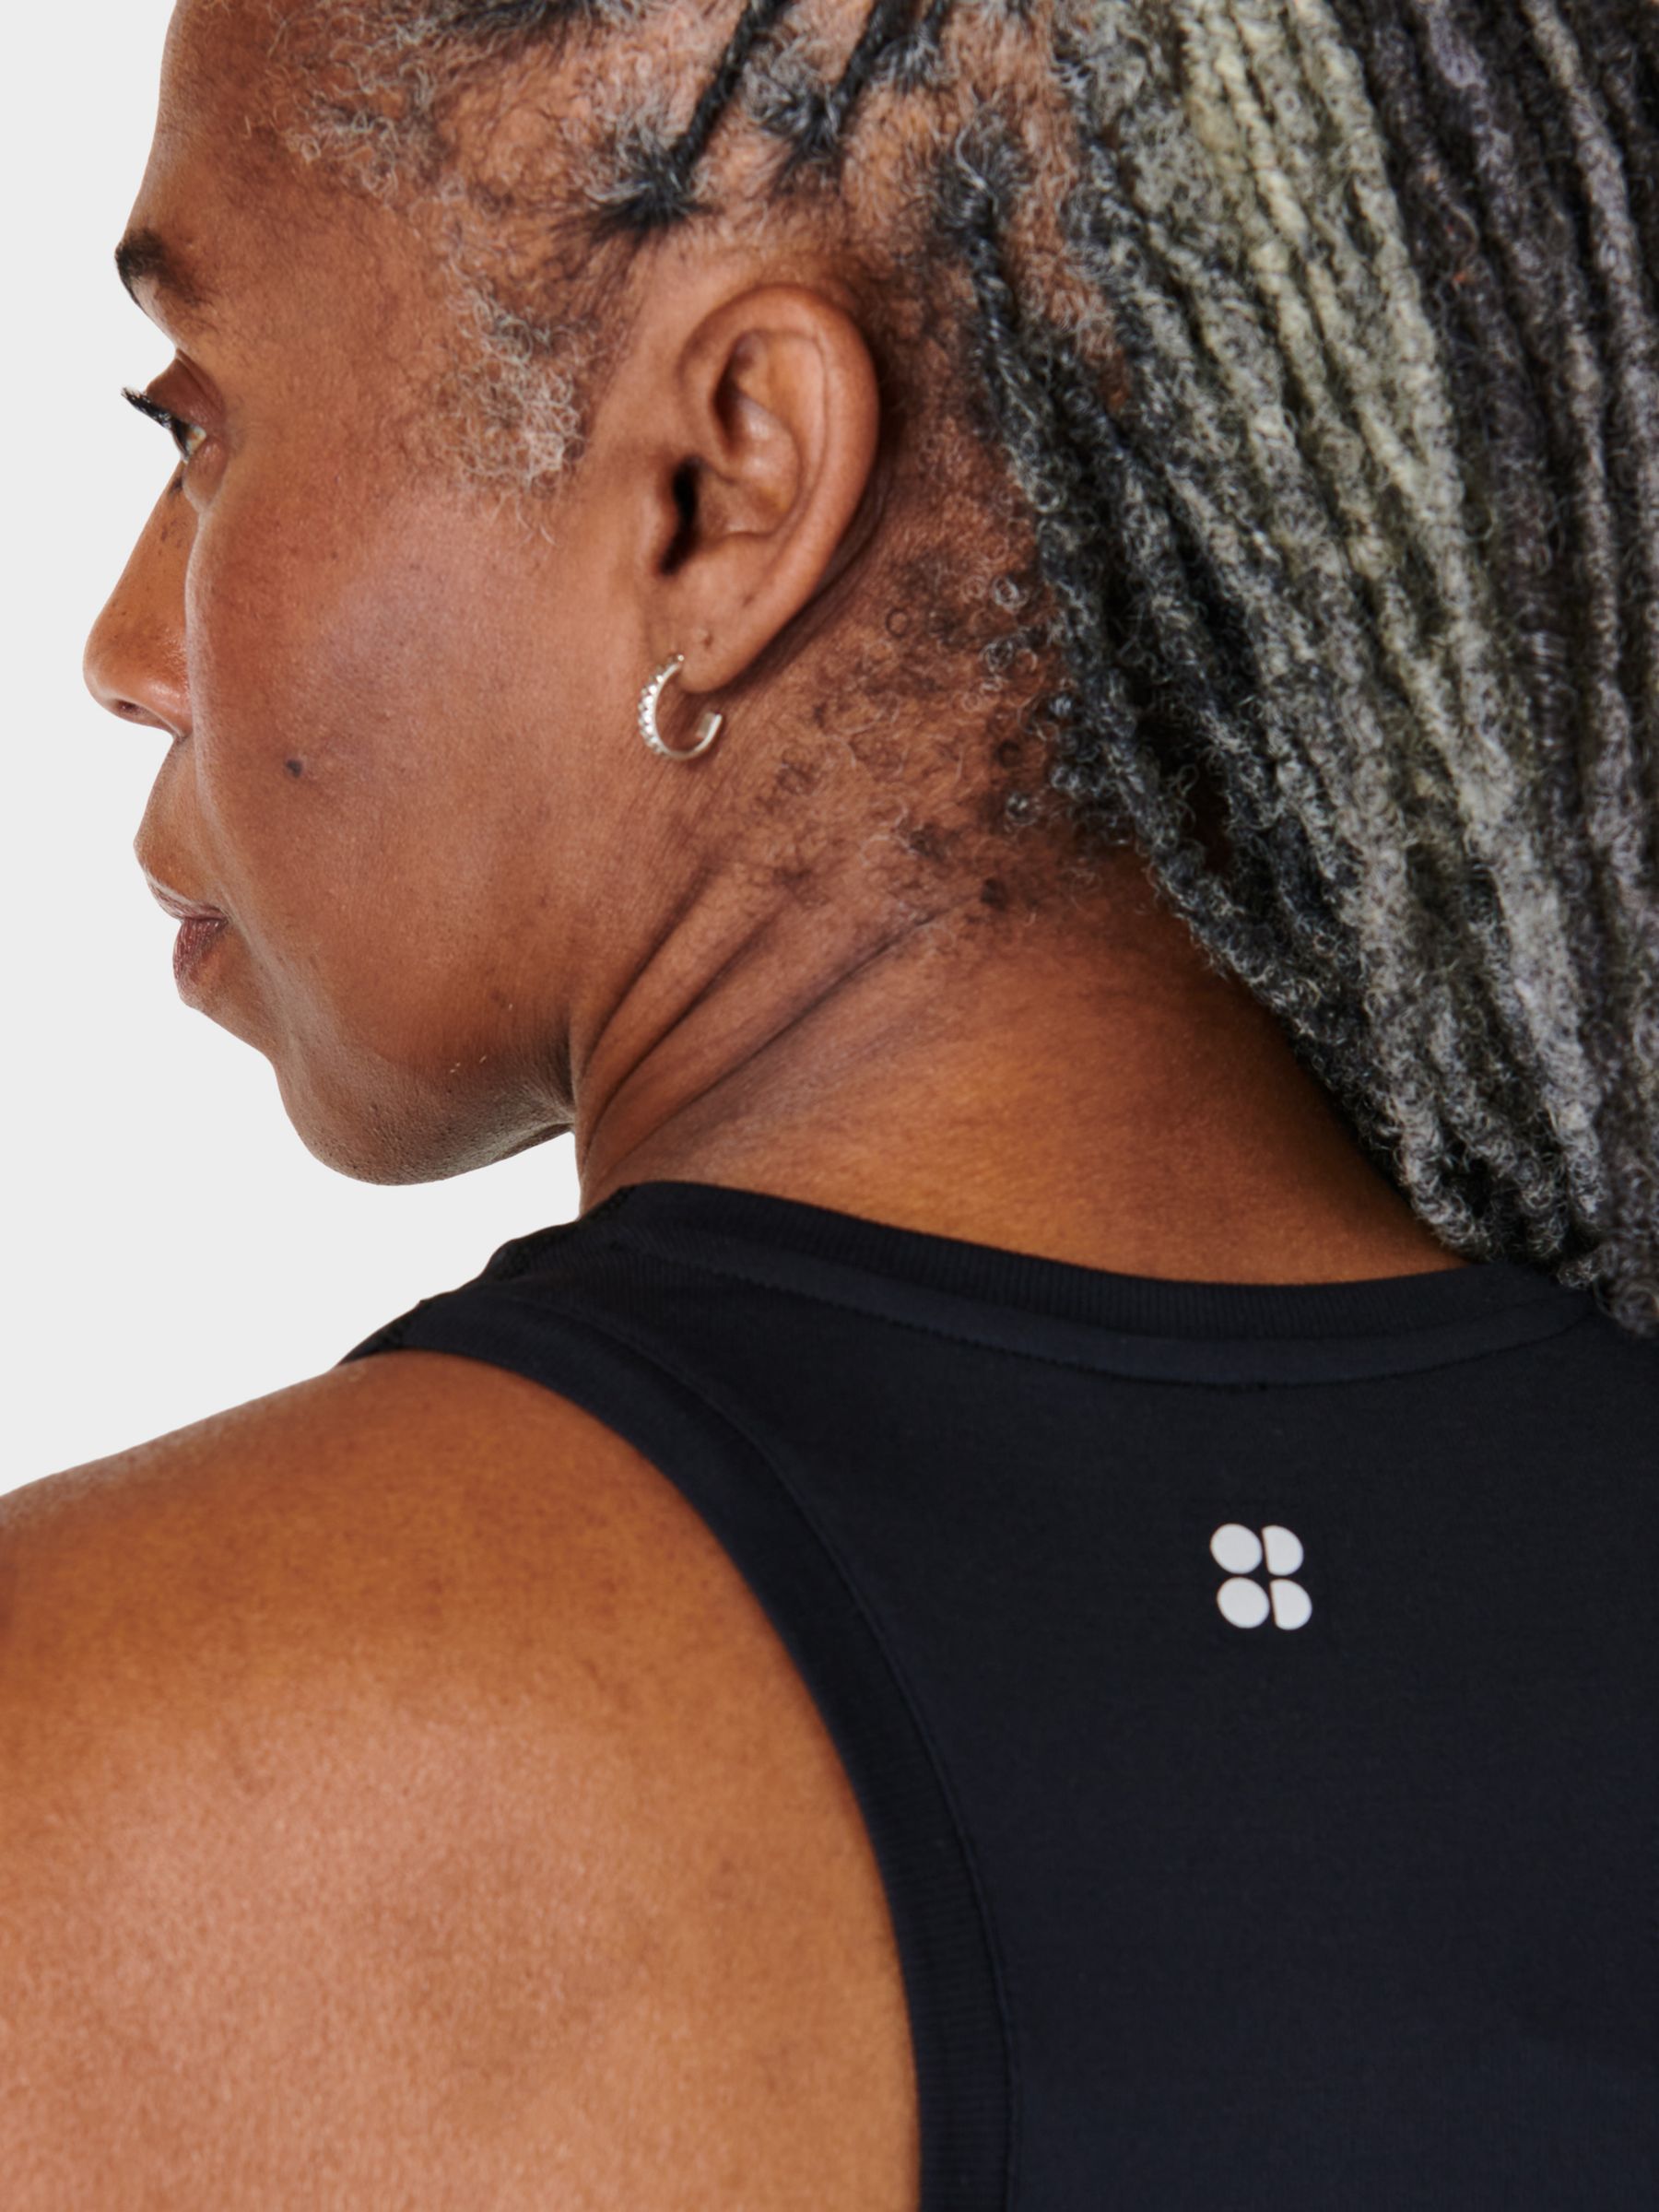 Sweaty Betty Athlete Seamless Gym Vest, Black, XS-S